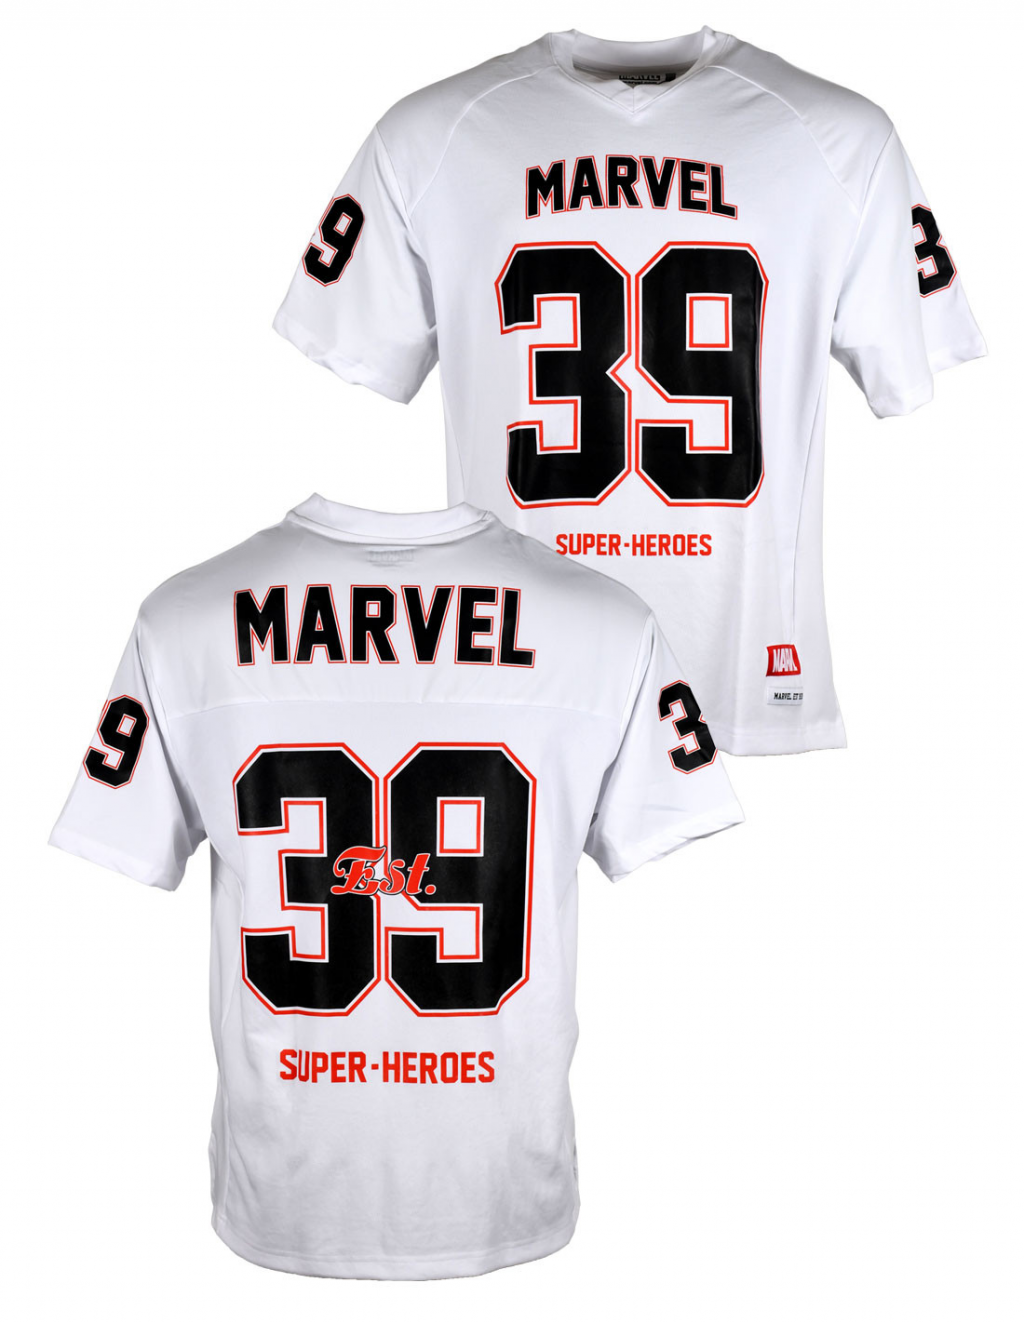 MARVEL - Super Heroes - T-Shirt Sports US Replica unisex (L)